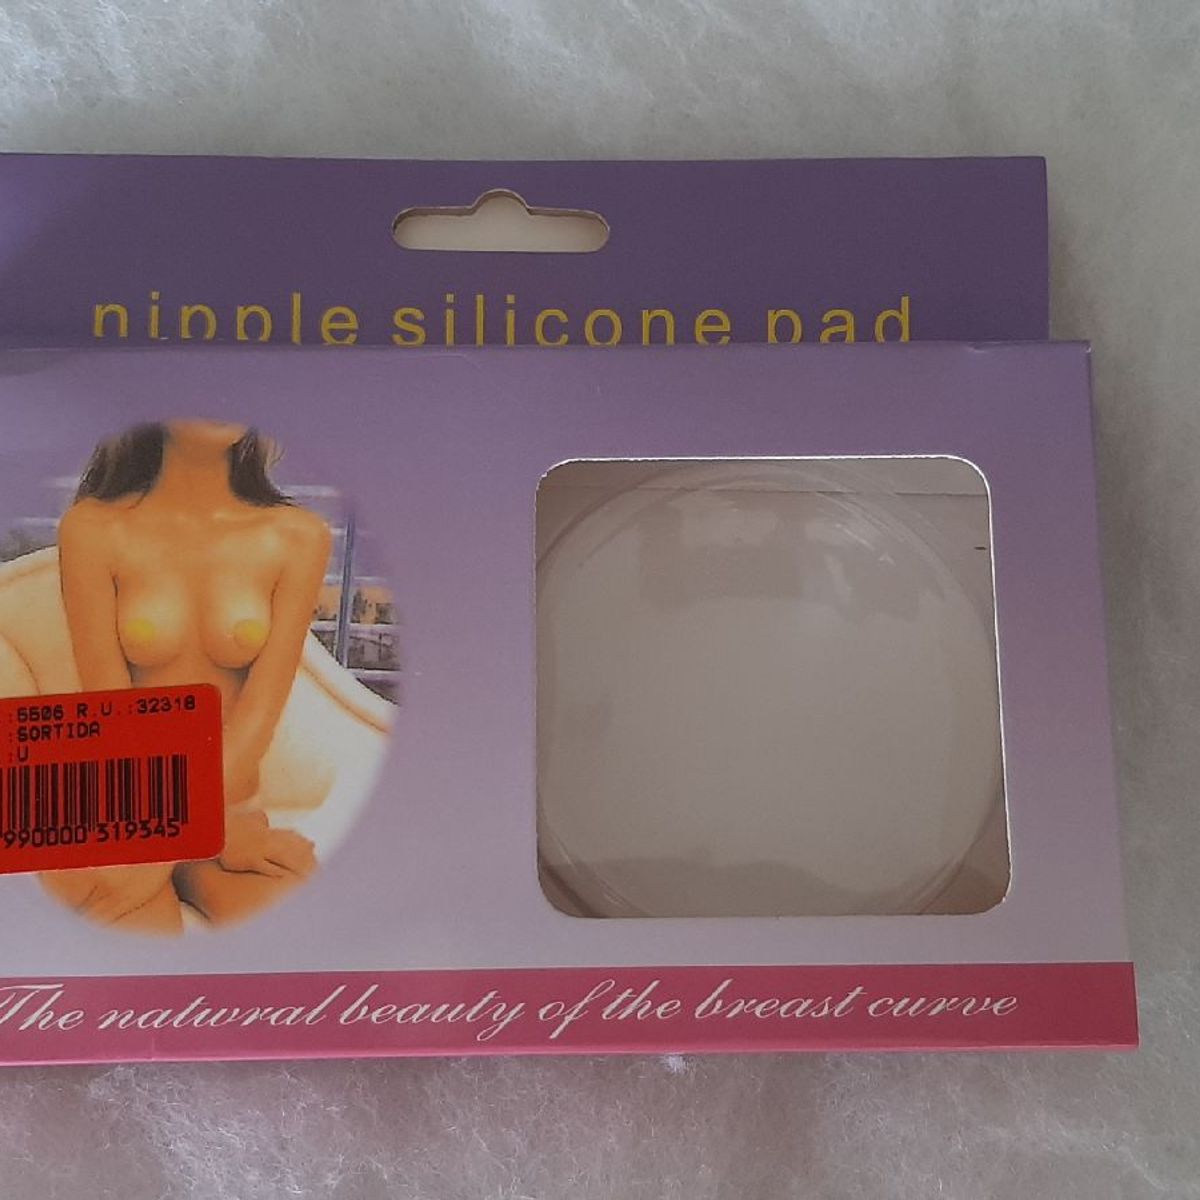 Nicole Silicone Pad, Produto Feminino Nipple-Silicone-Pad Nunca Usado  52828426